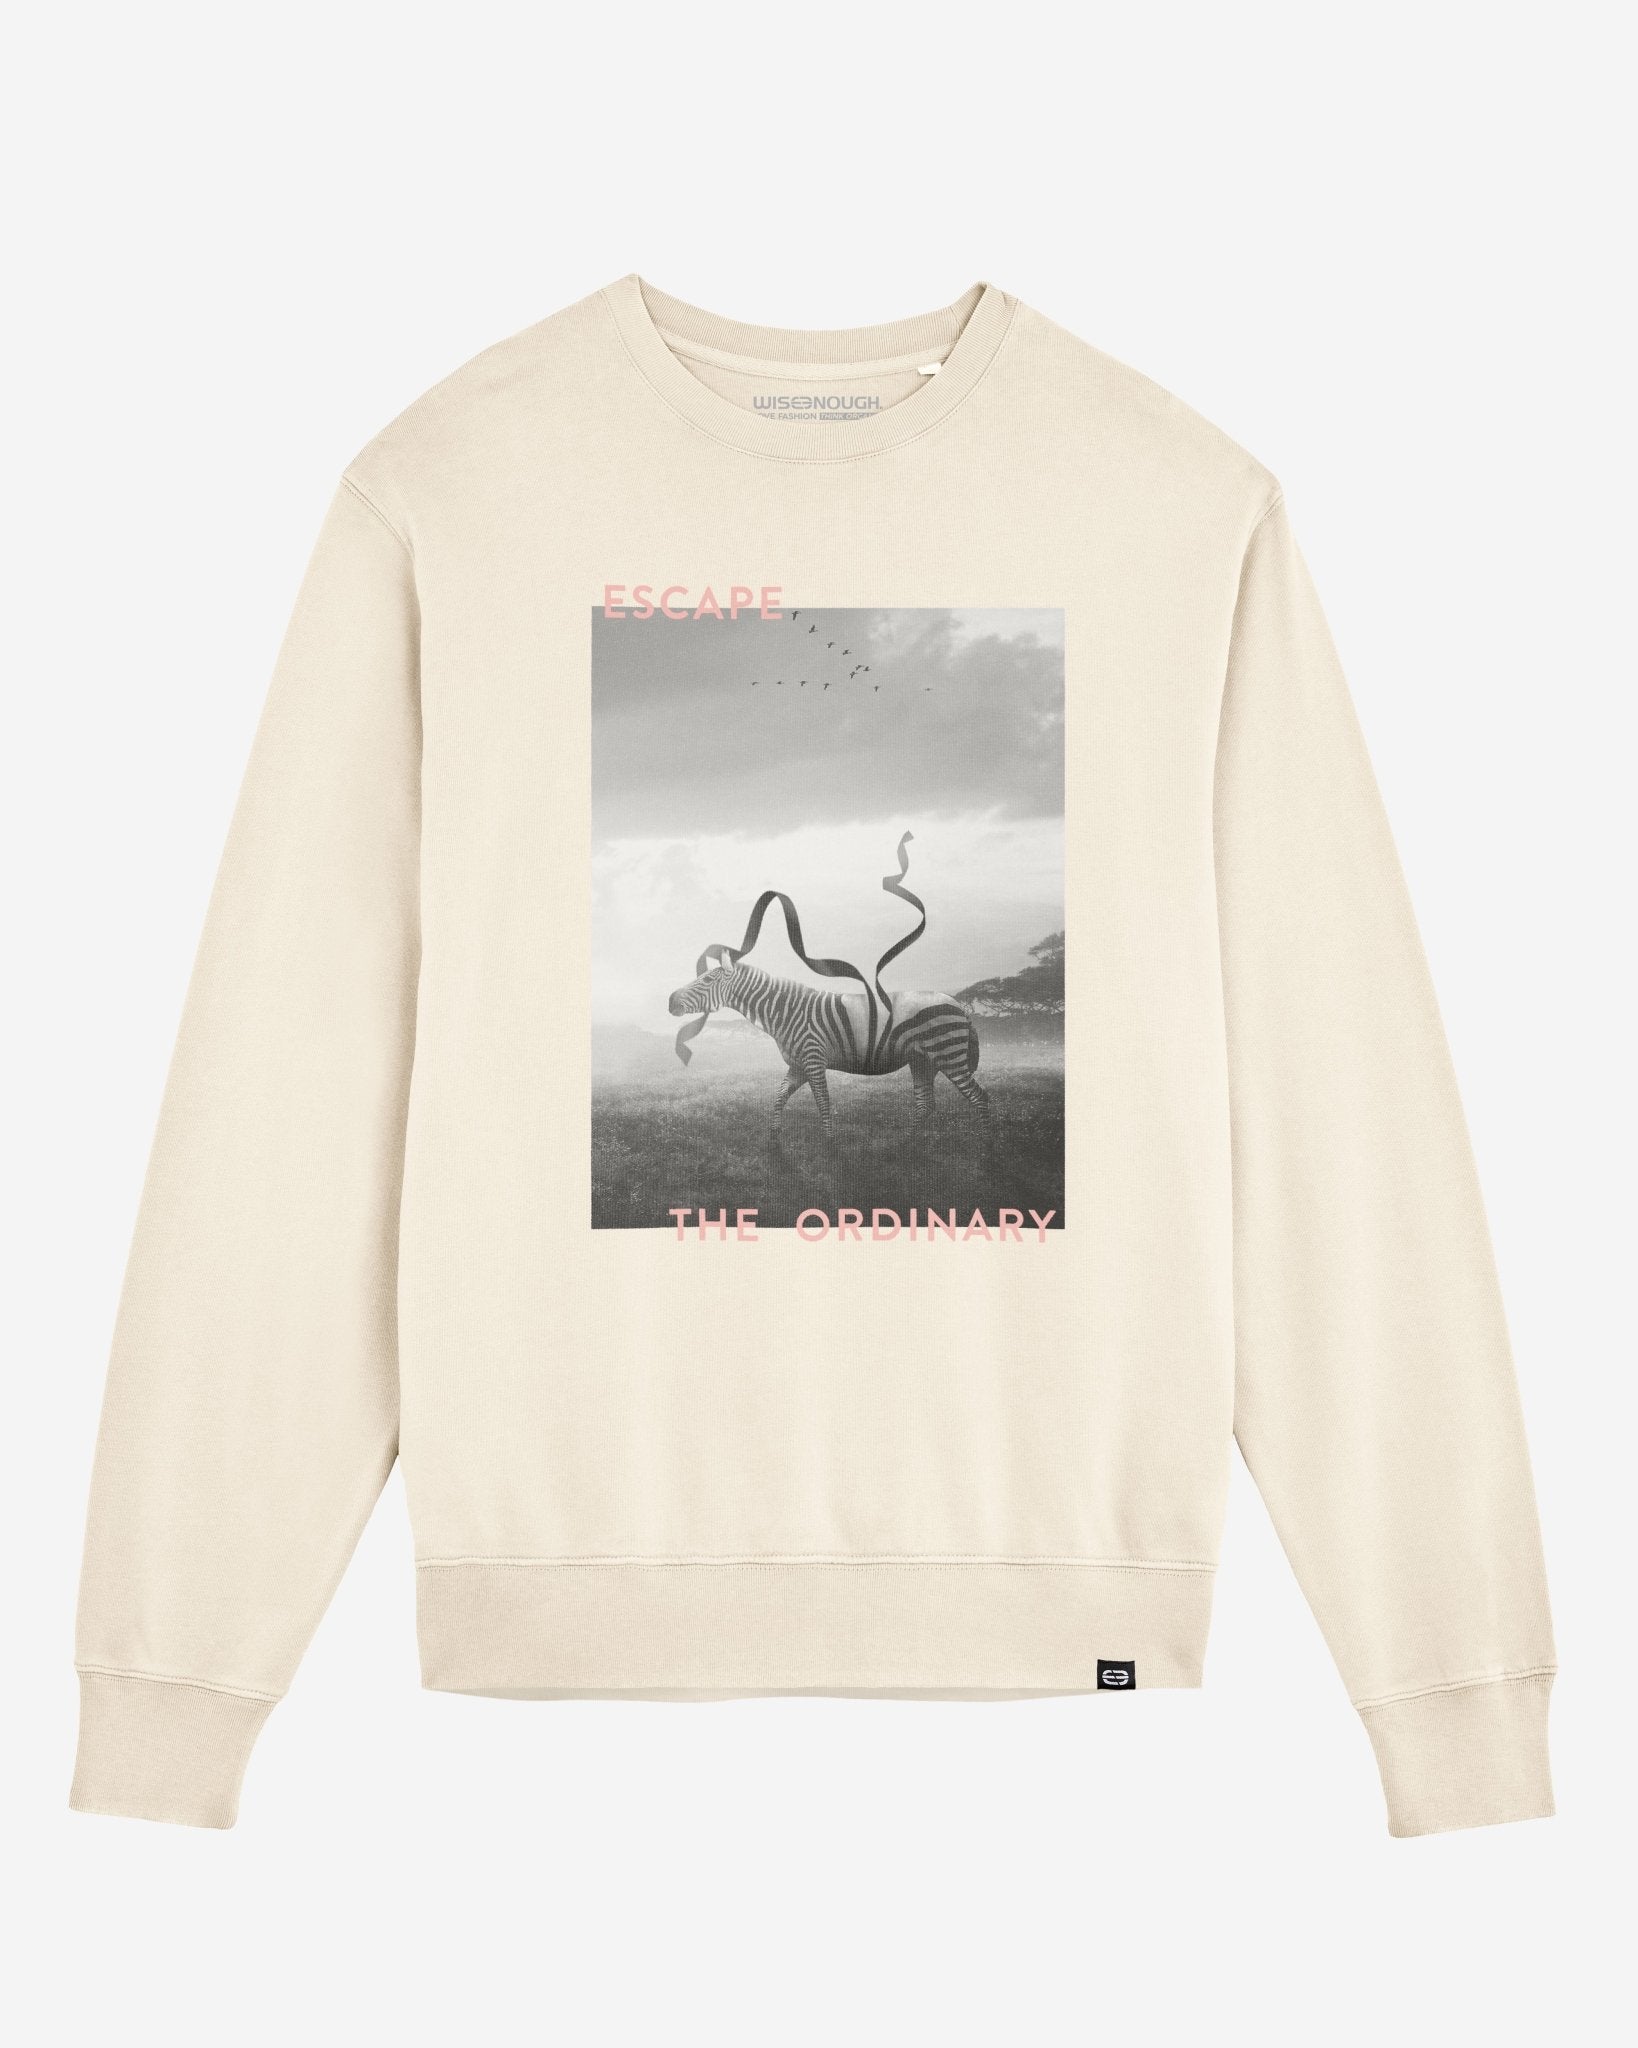 Crewneck Sweatshirt - Escape the ordinary "Losing it" - wiseenough. | Nachhaltige Streetwear